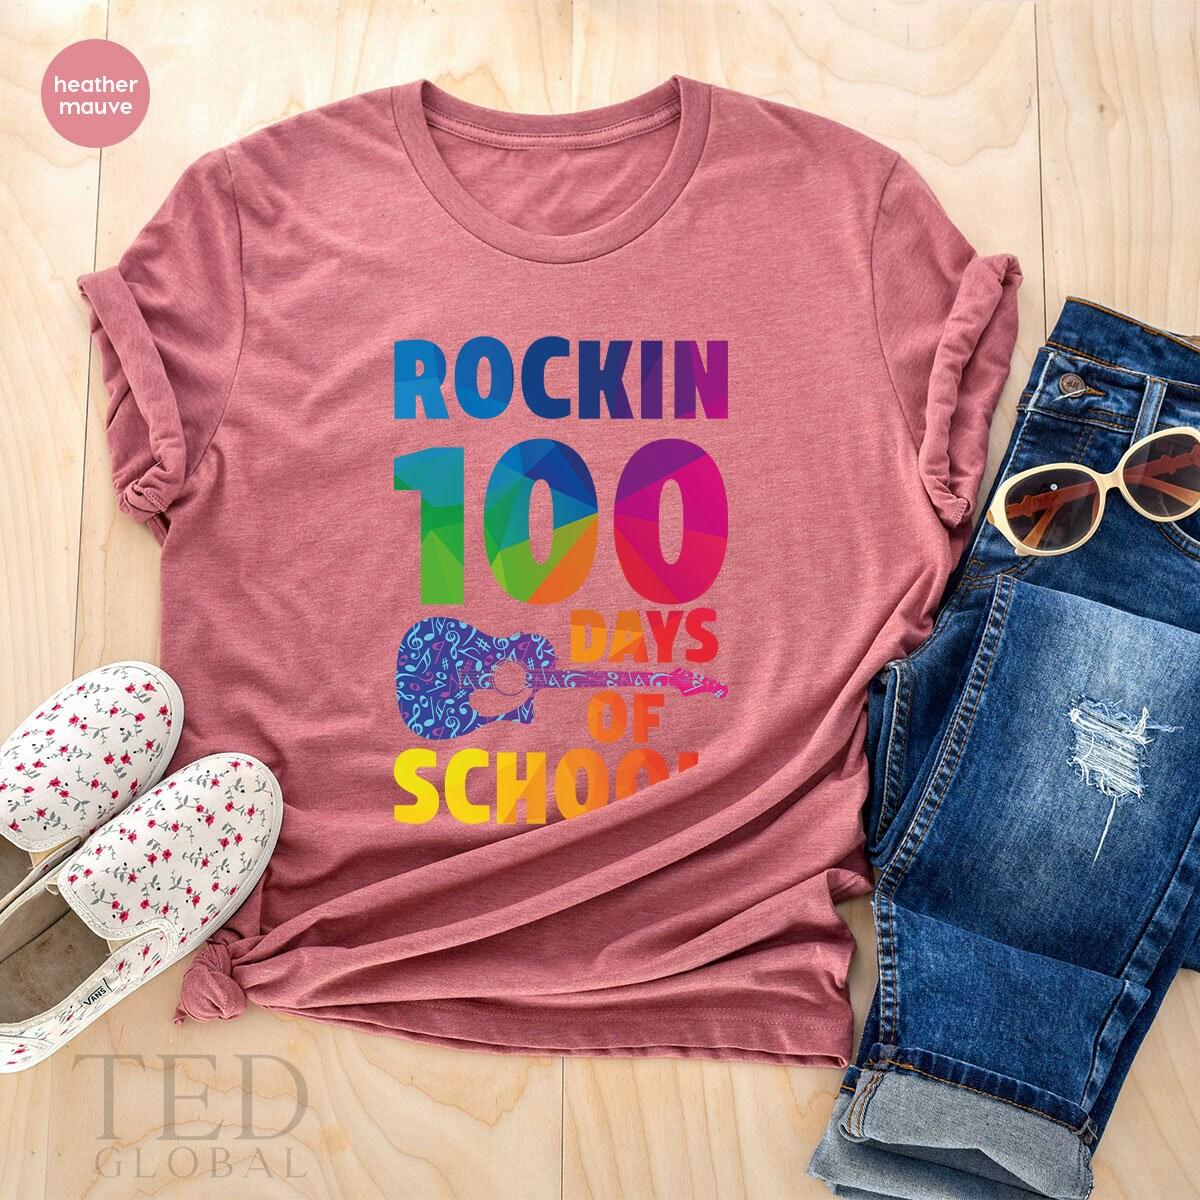 100 Day Of School Shirt, Funny Rockin T Shirt, Back To School T Shirt, Cute Kindergarten Shirts, Cute School T-Shirt, Gift For School - Fastdeliverytees.com